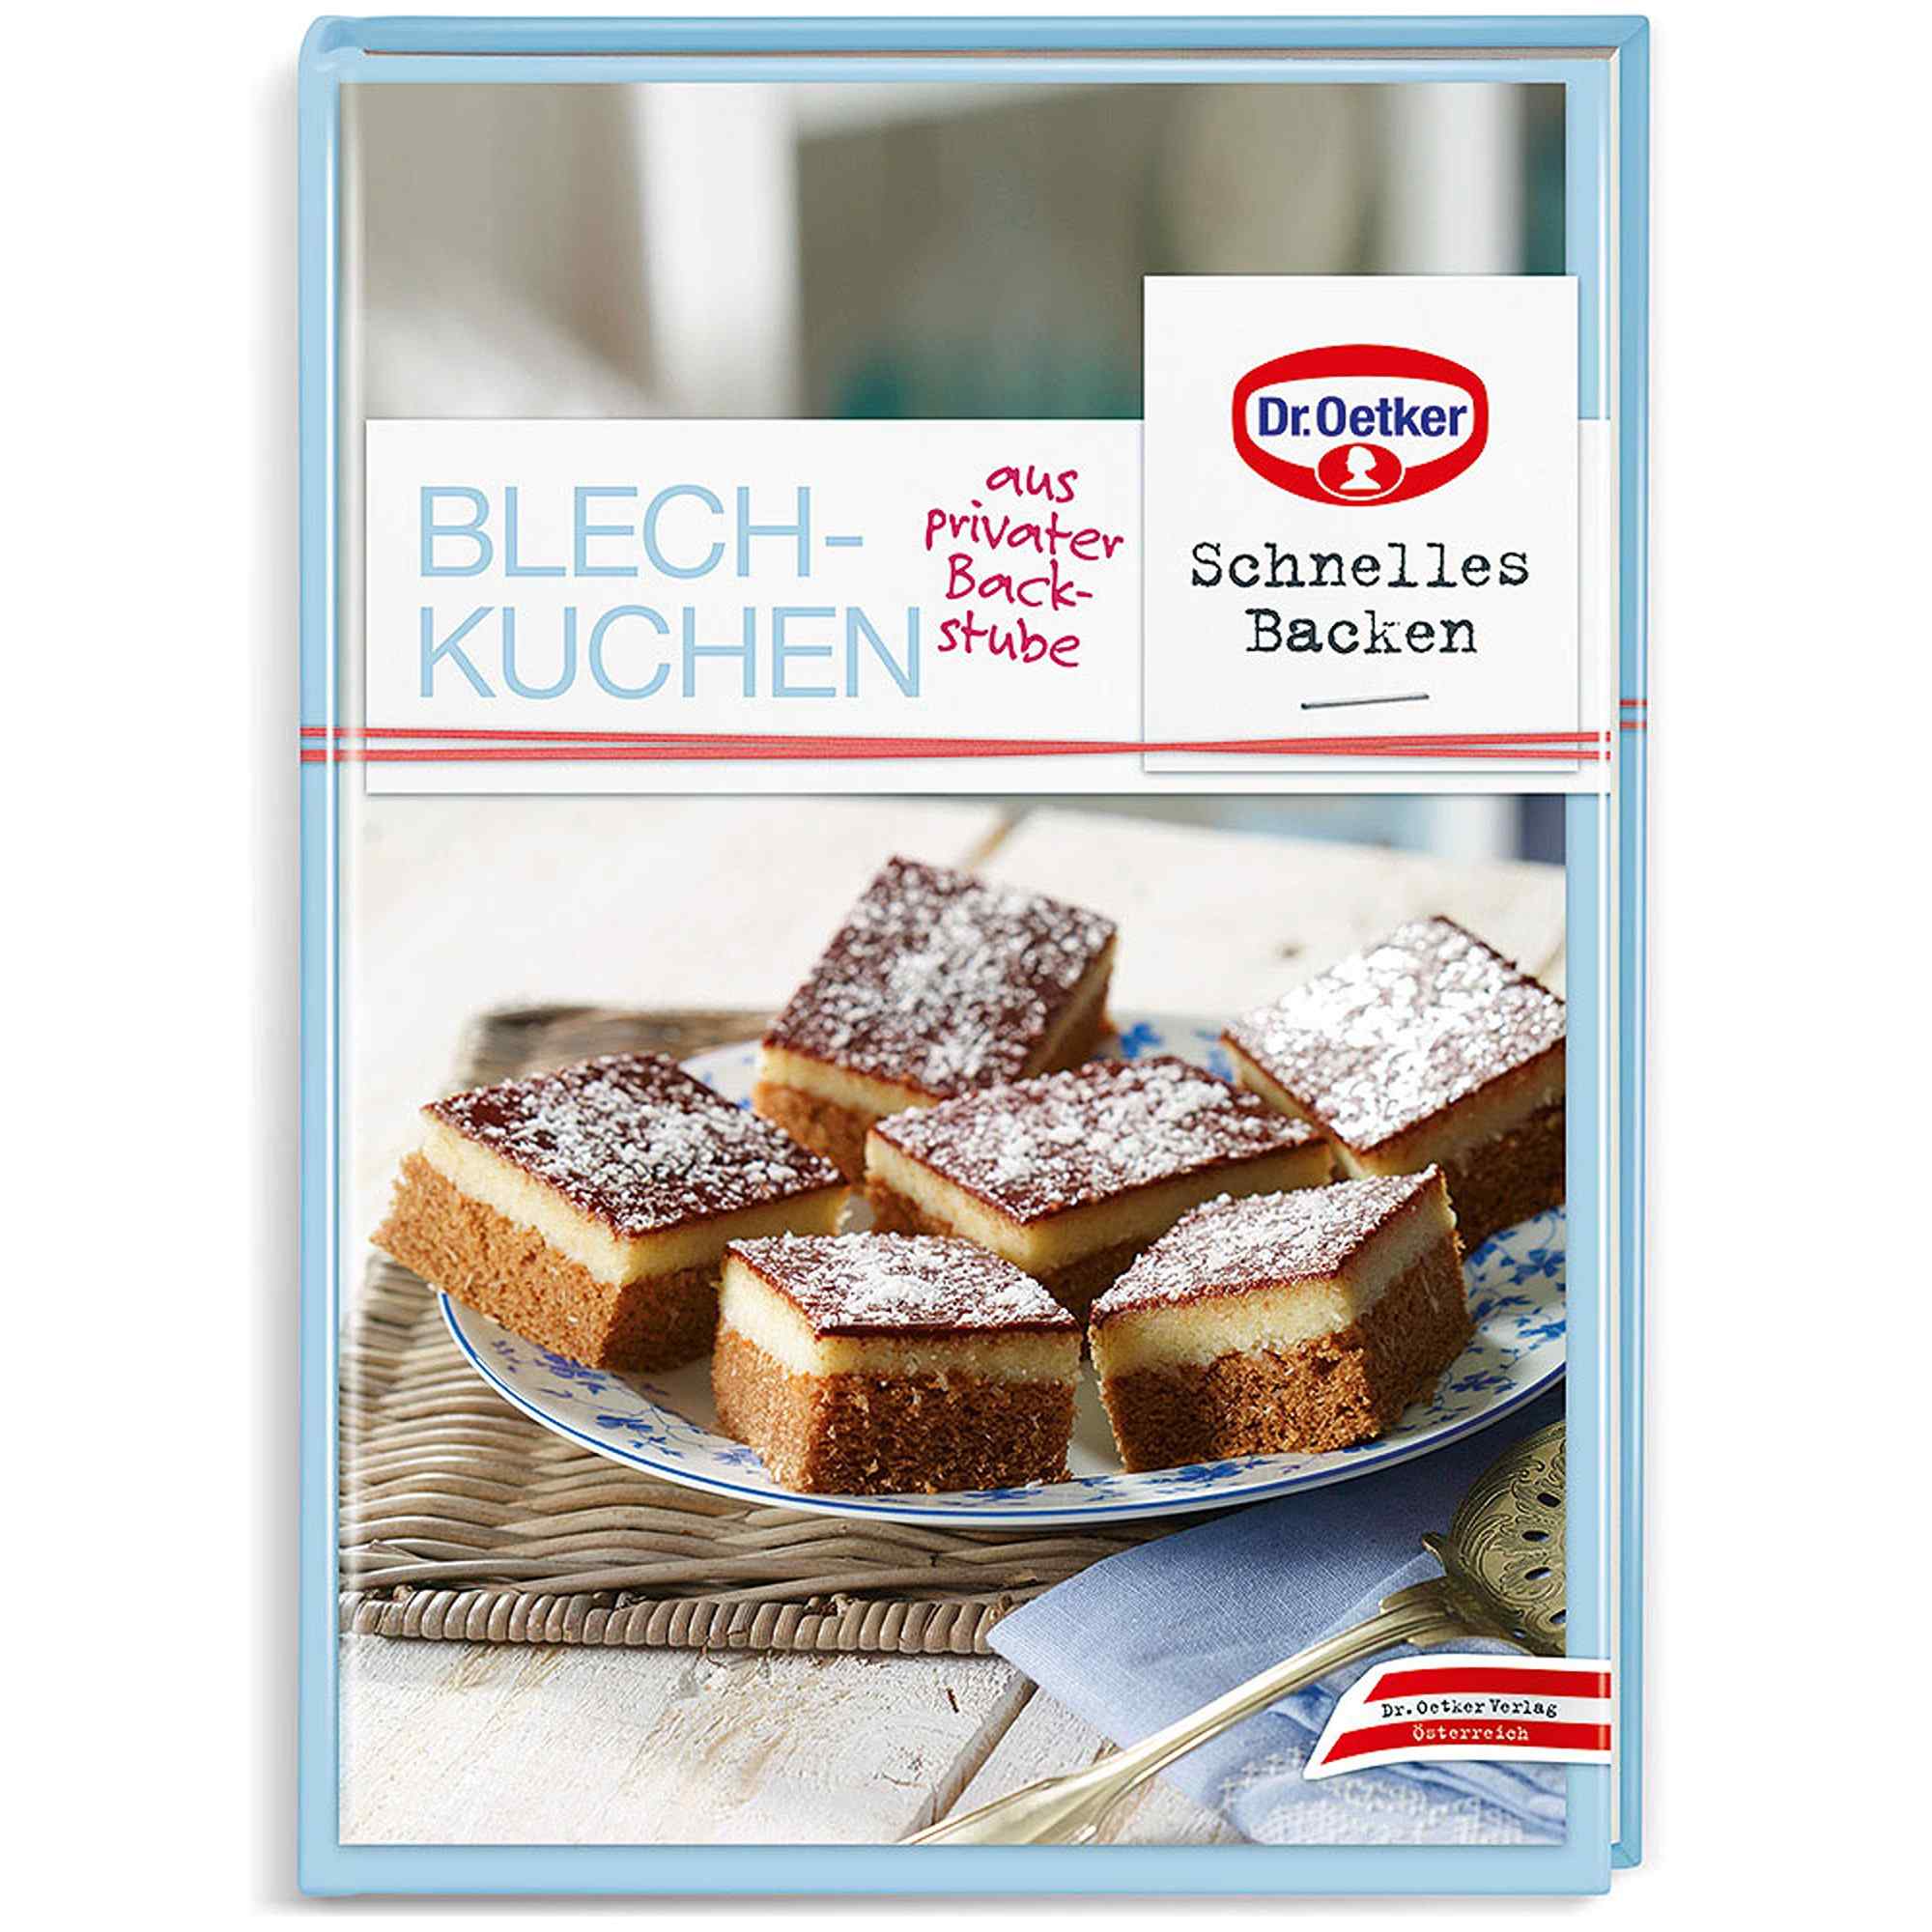 Net zo wildernis Krijger Buy Dr. Oetker sheet cake from private bakery - 1 piece online